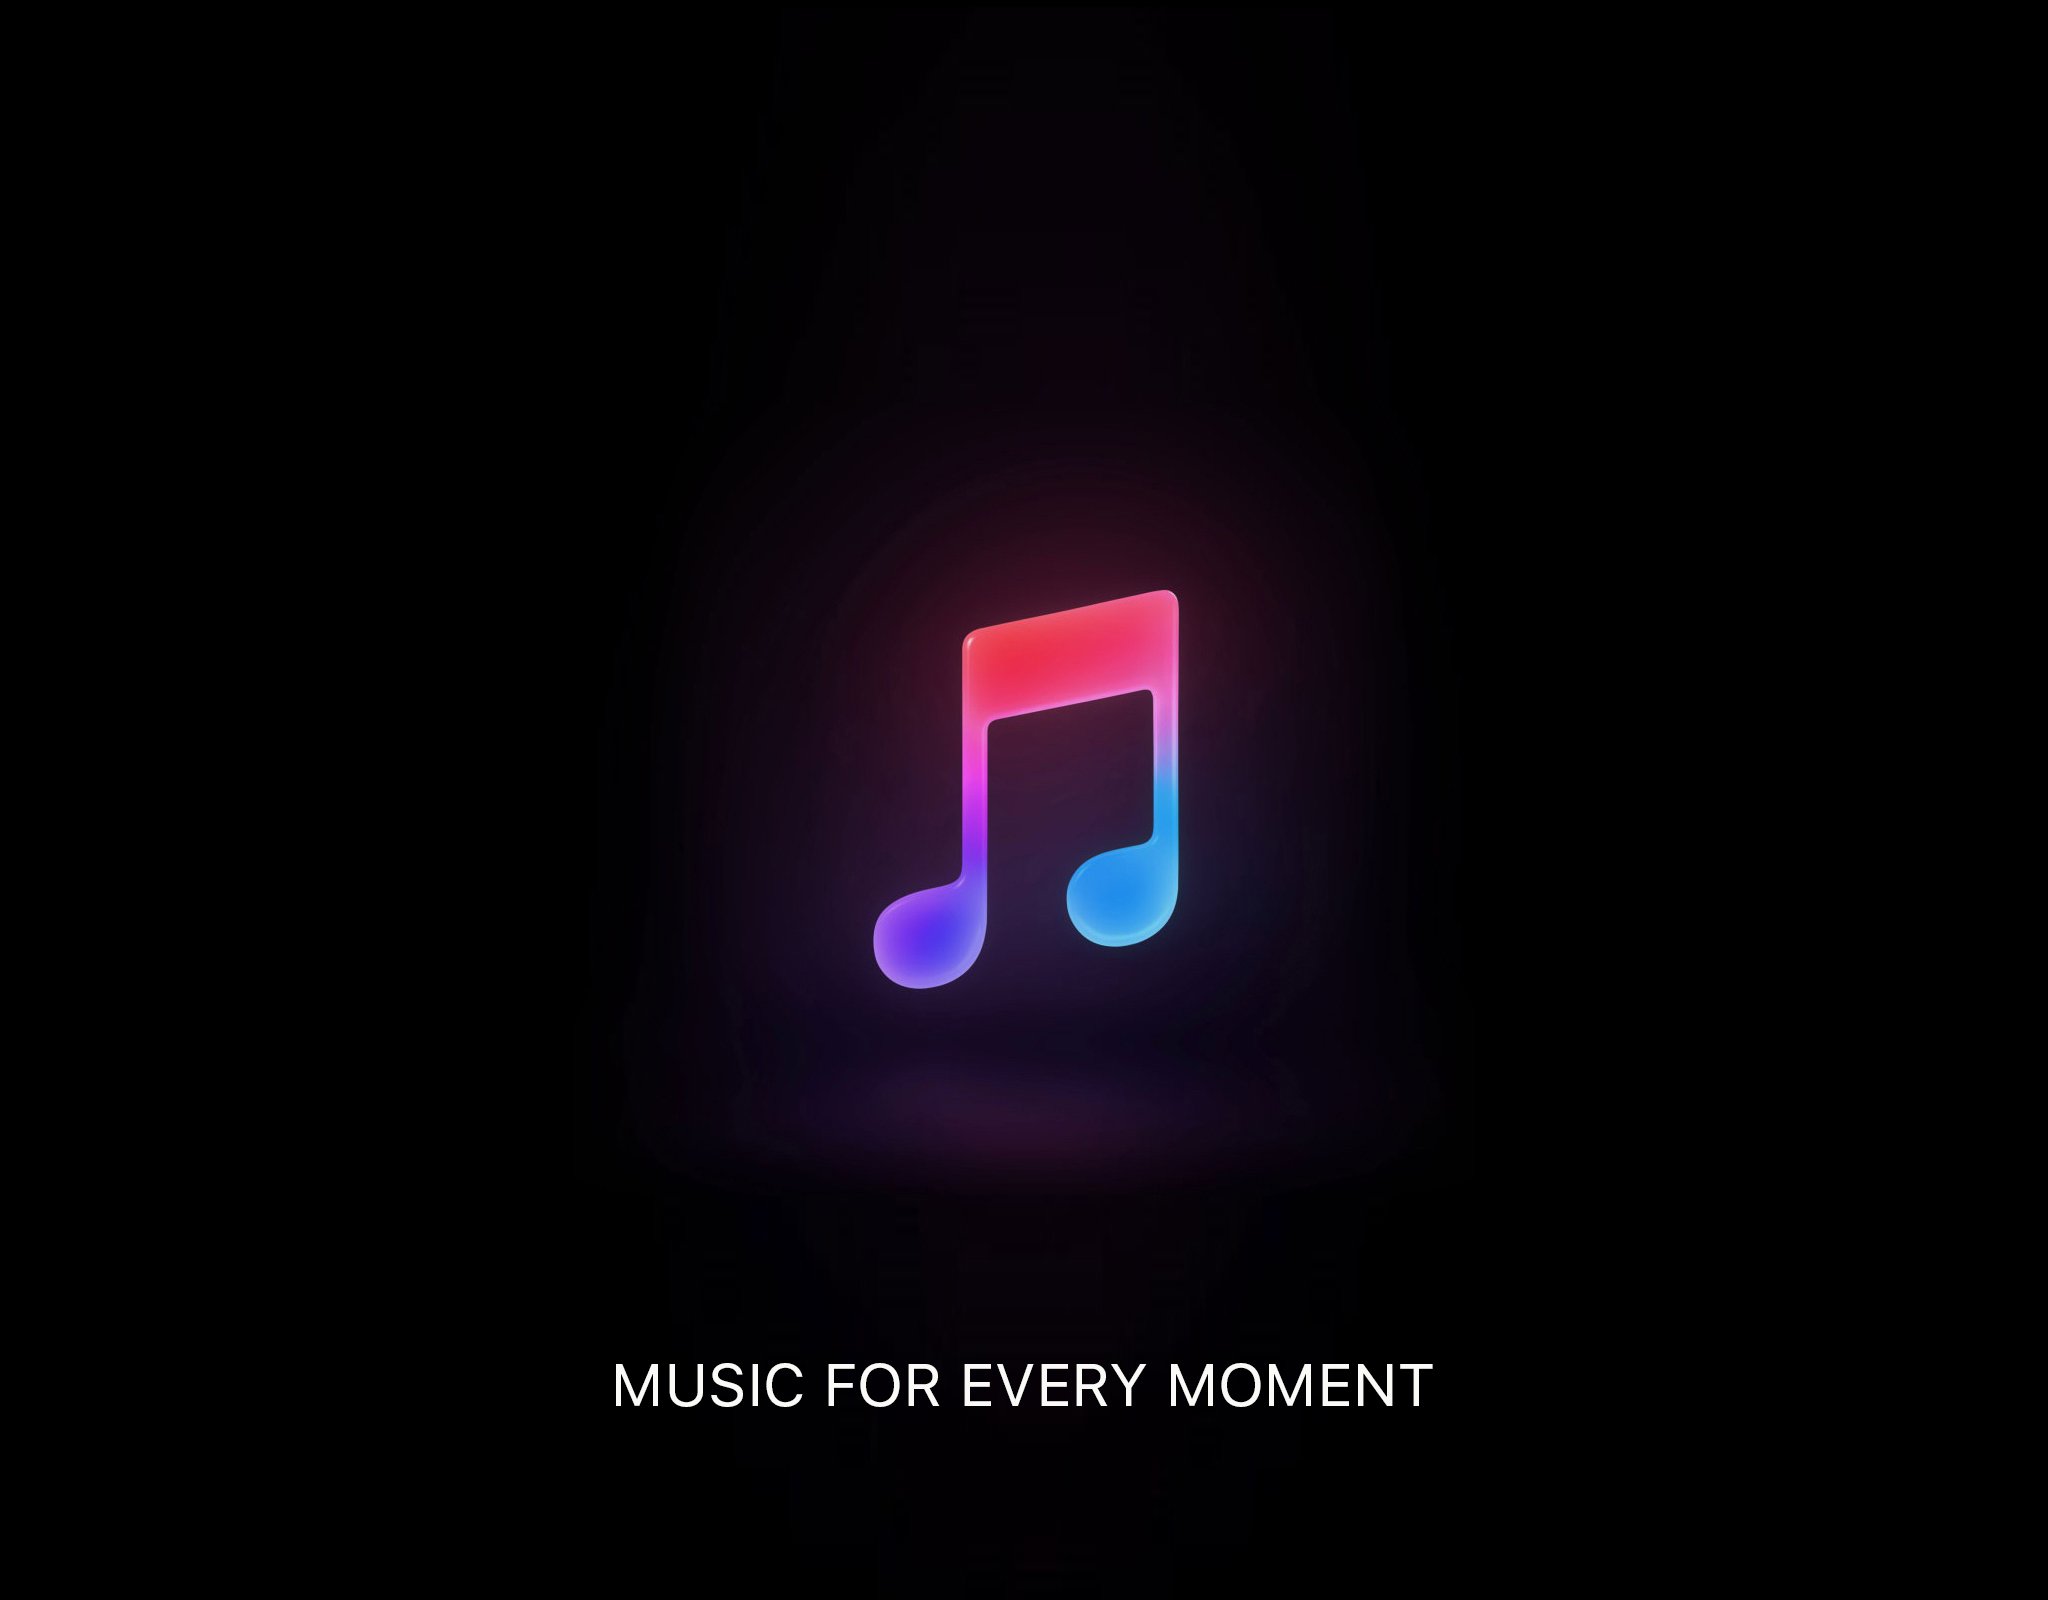 Apple music live